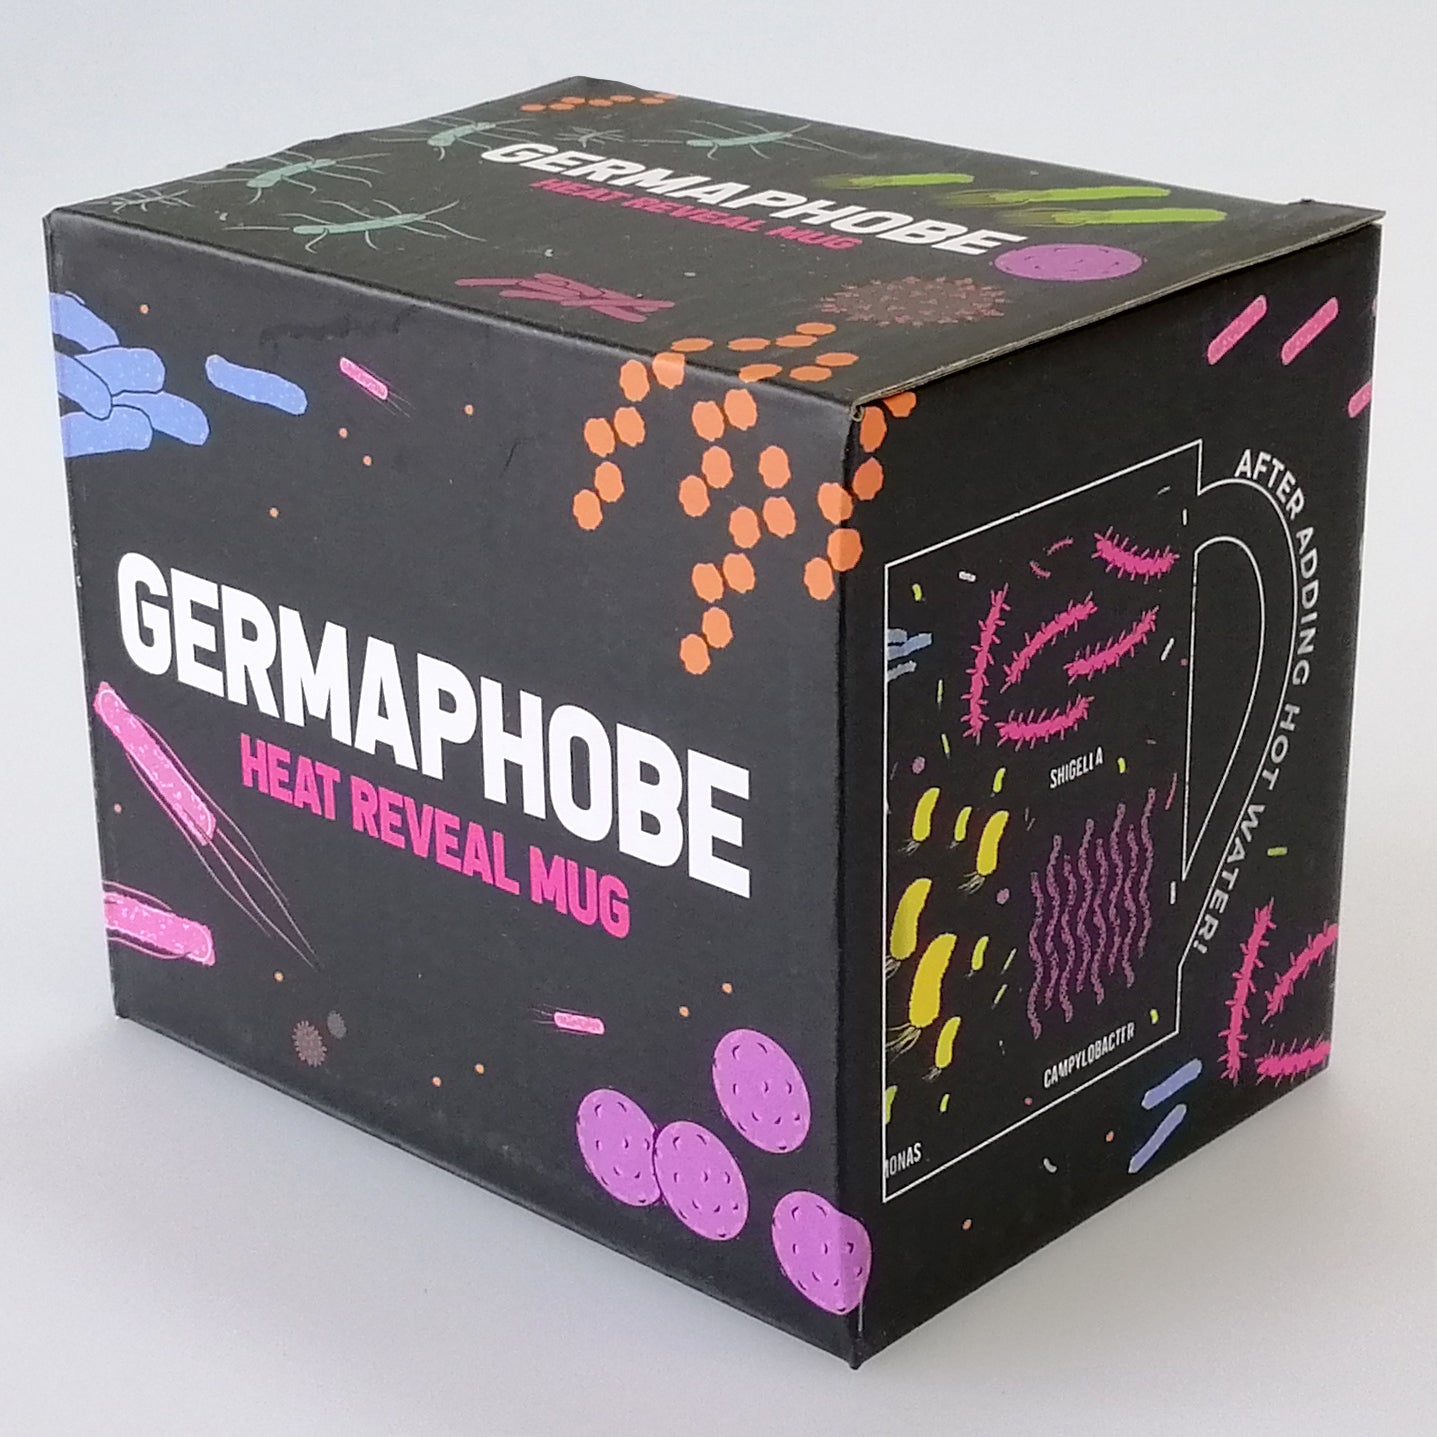 Germaphobe - Heat Reveal Mug